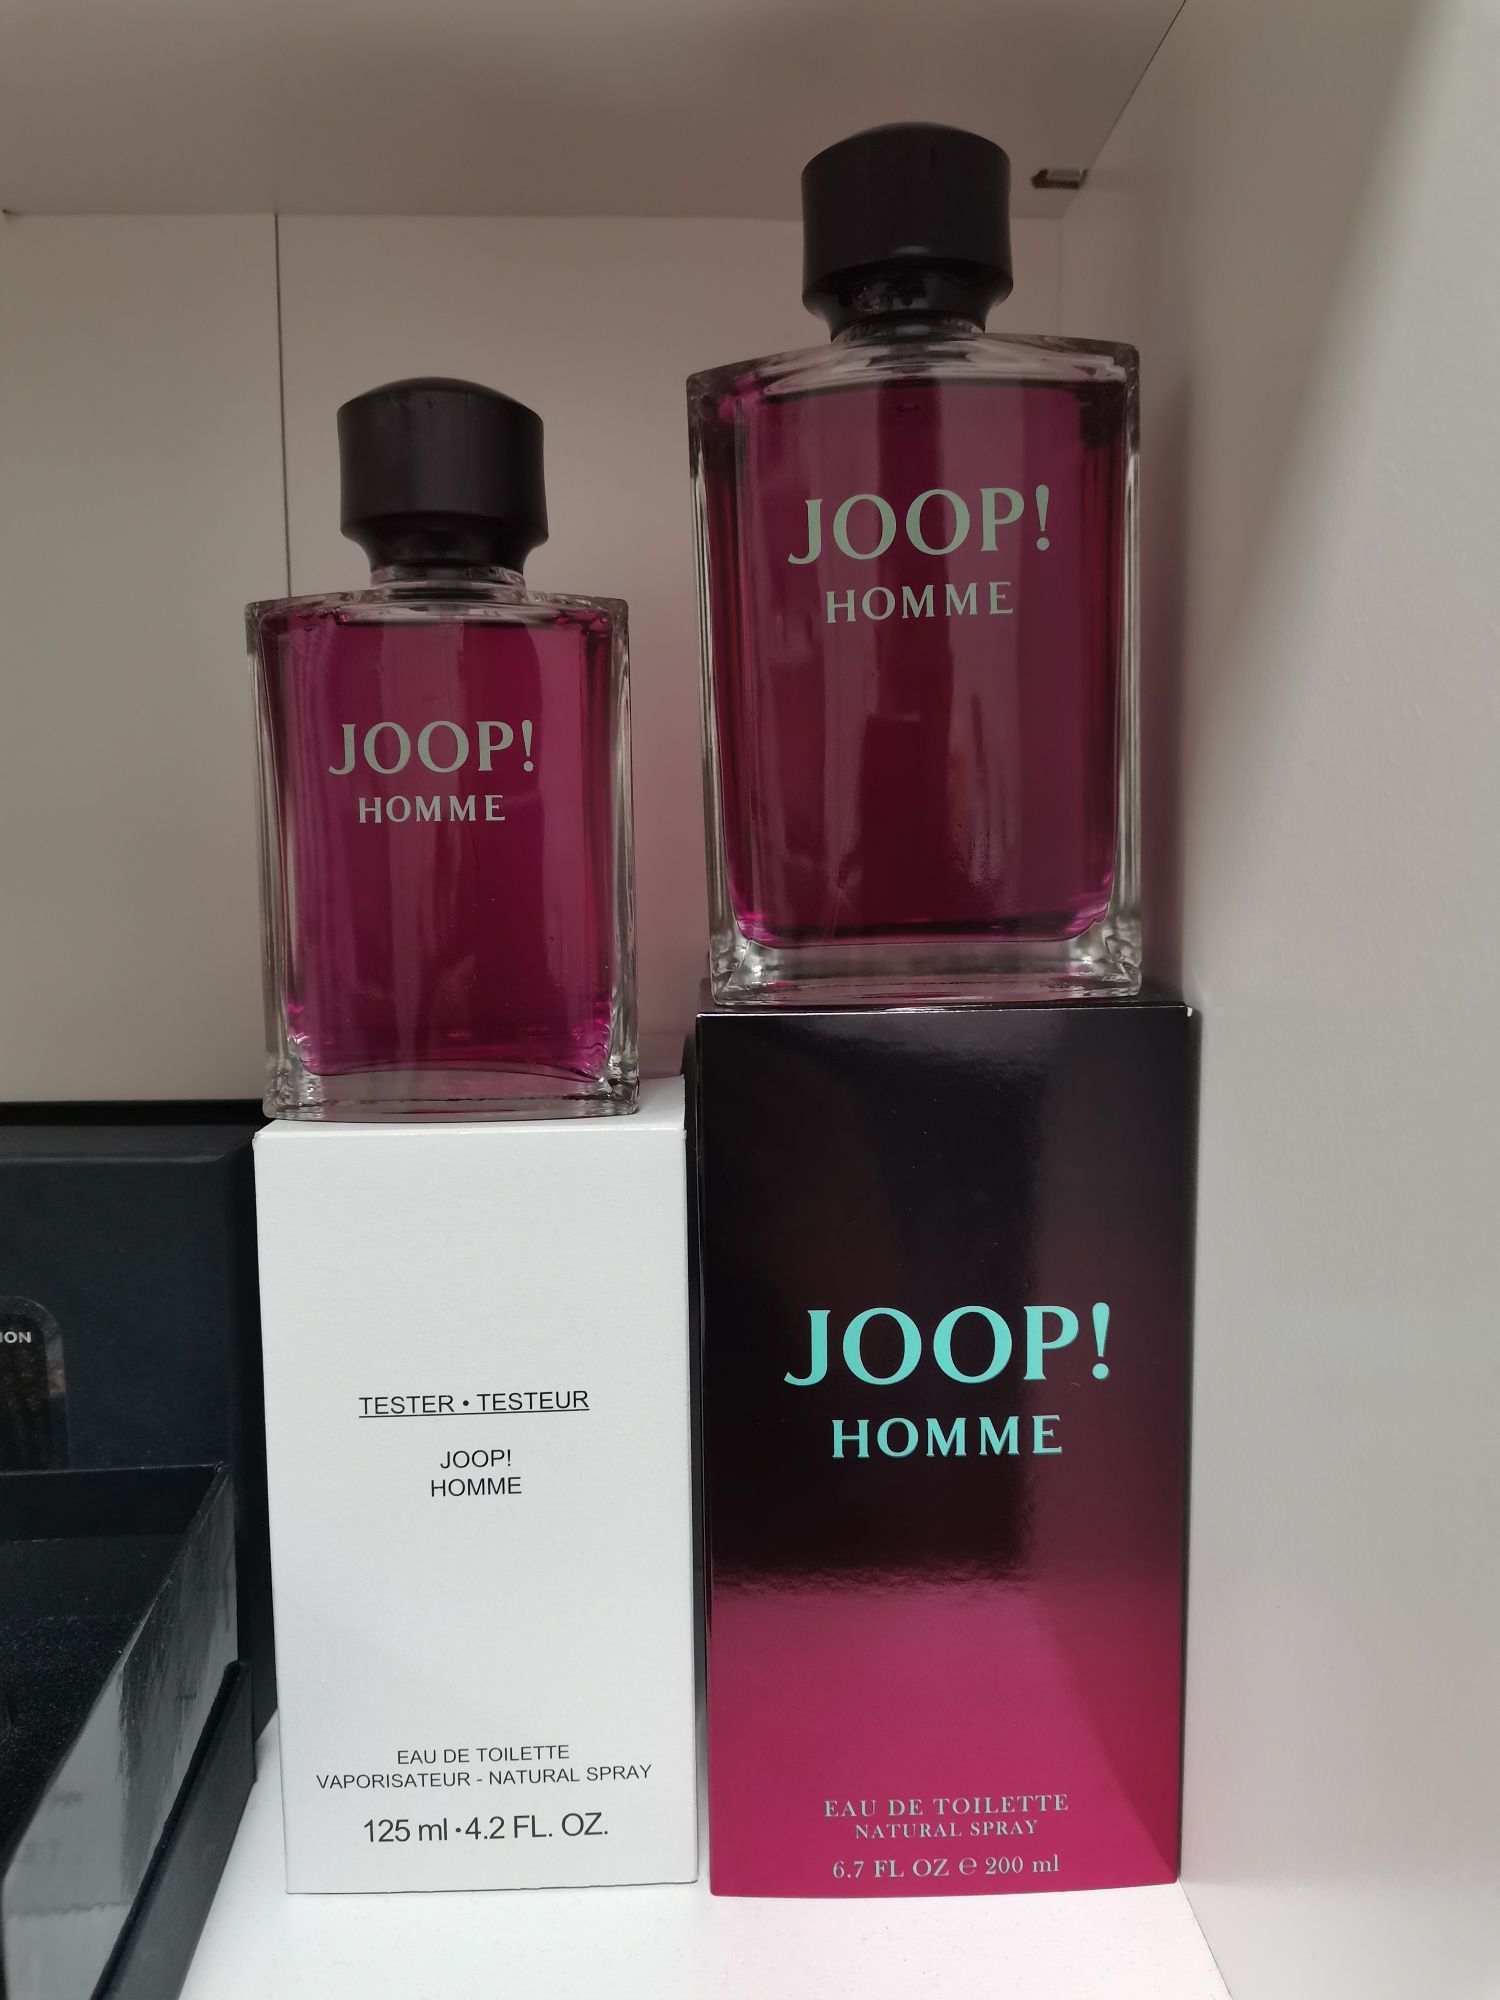 Parfum Joop! Homme 125ml - 100% original!